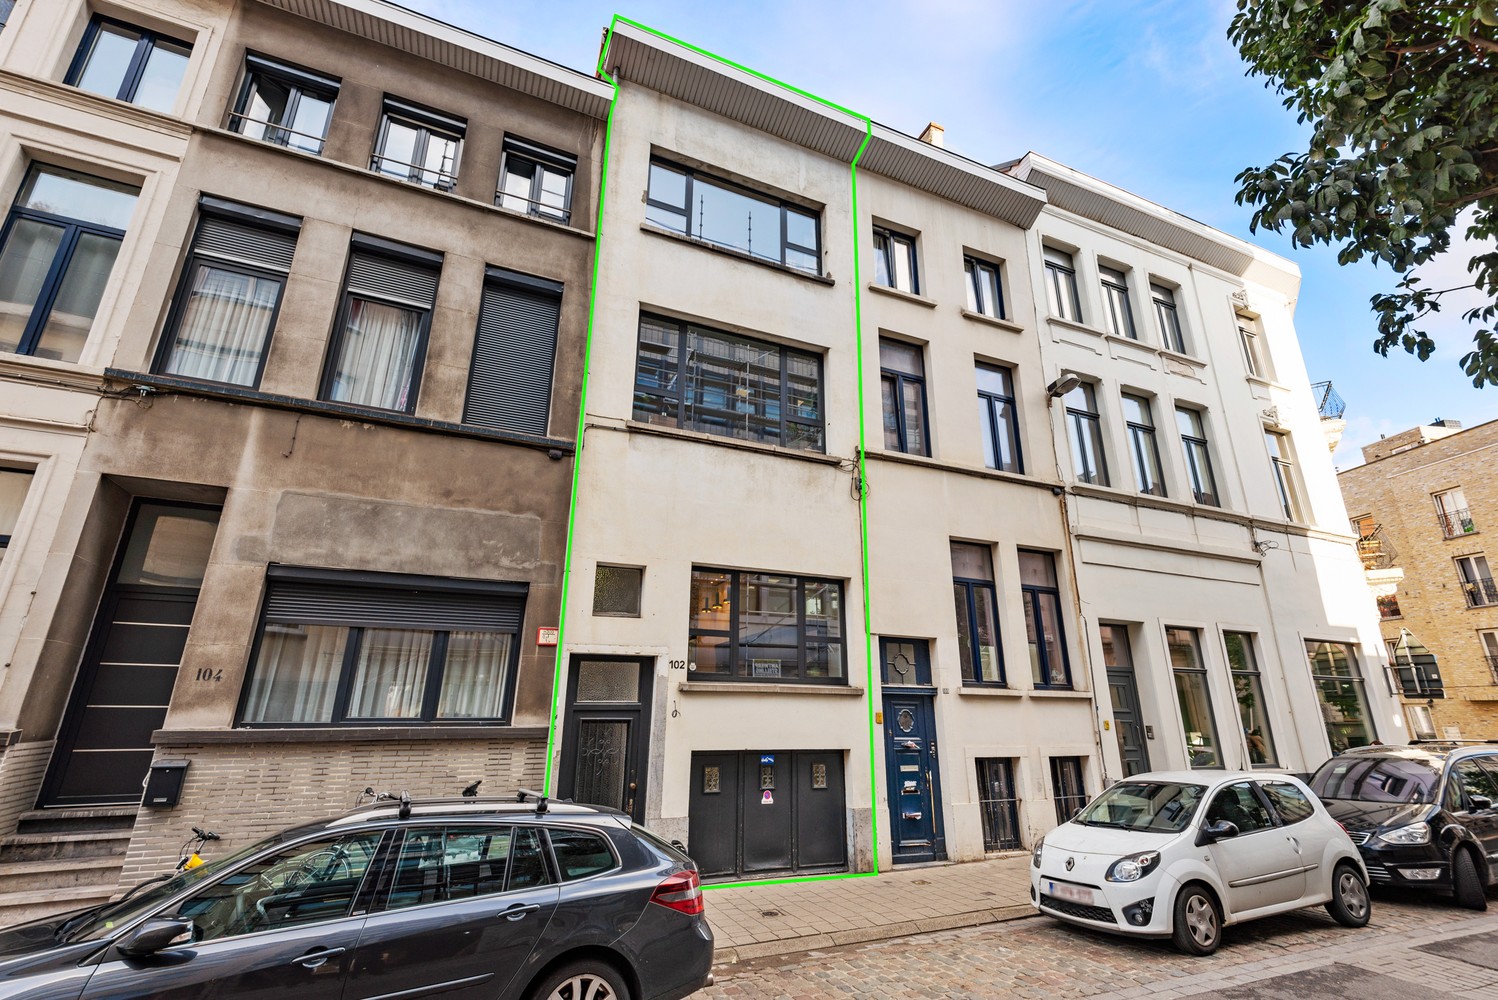 Unieke woning met twee slaapkamers, gezellige tuin & lage garage in Antwerpen! afbeelding 1